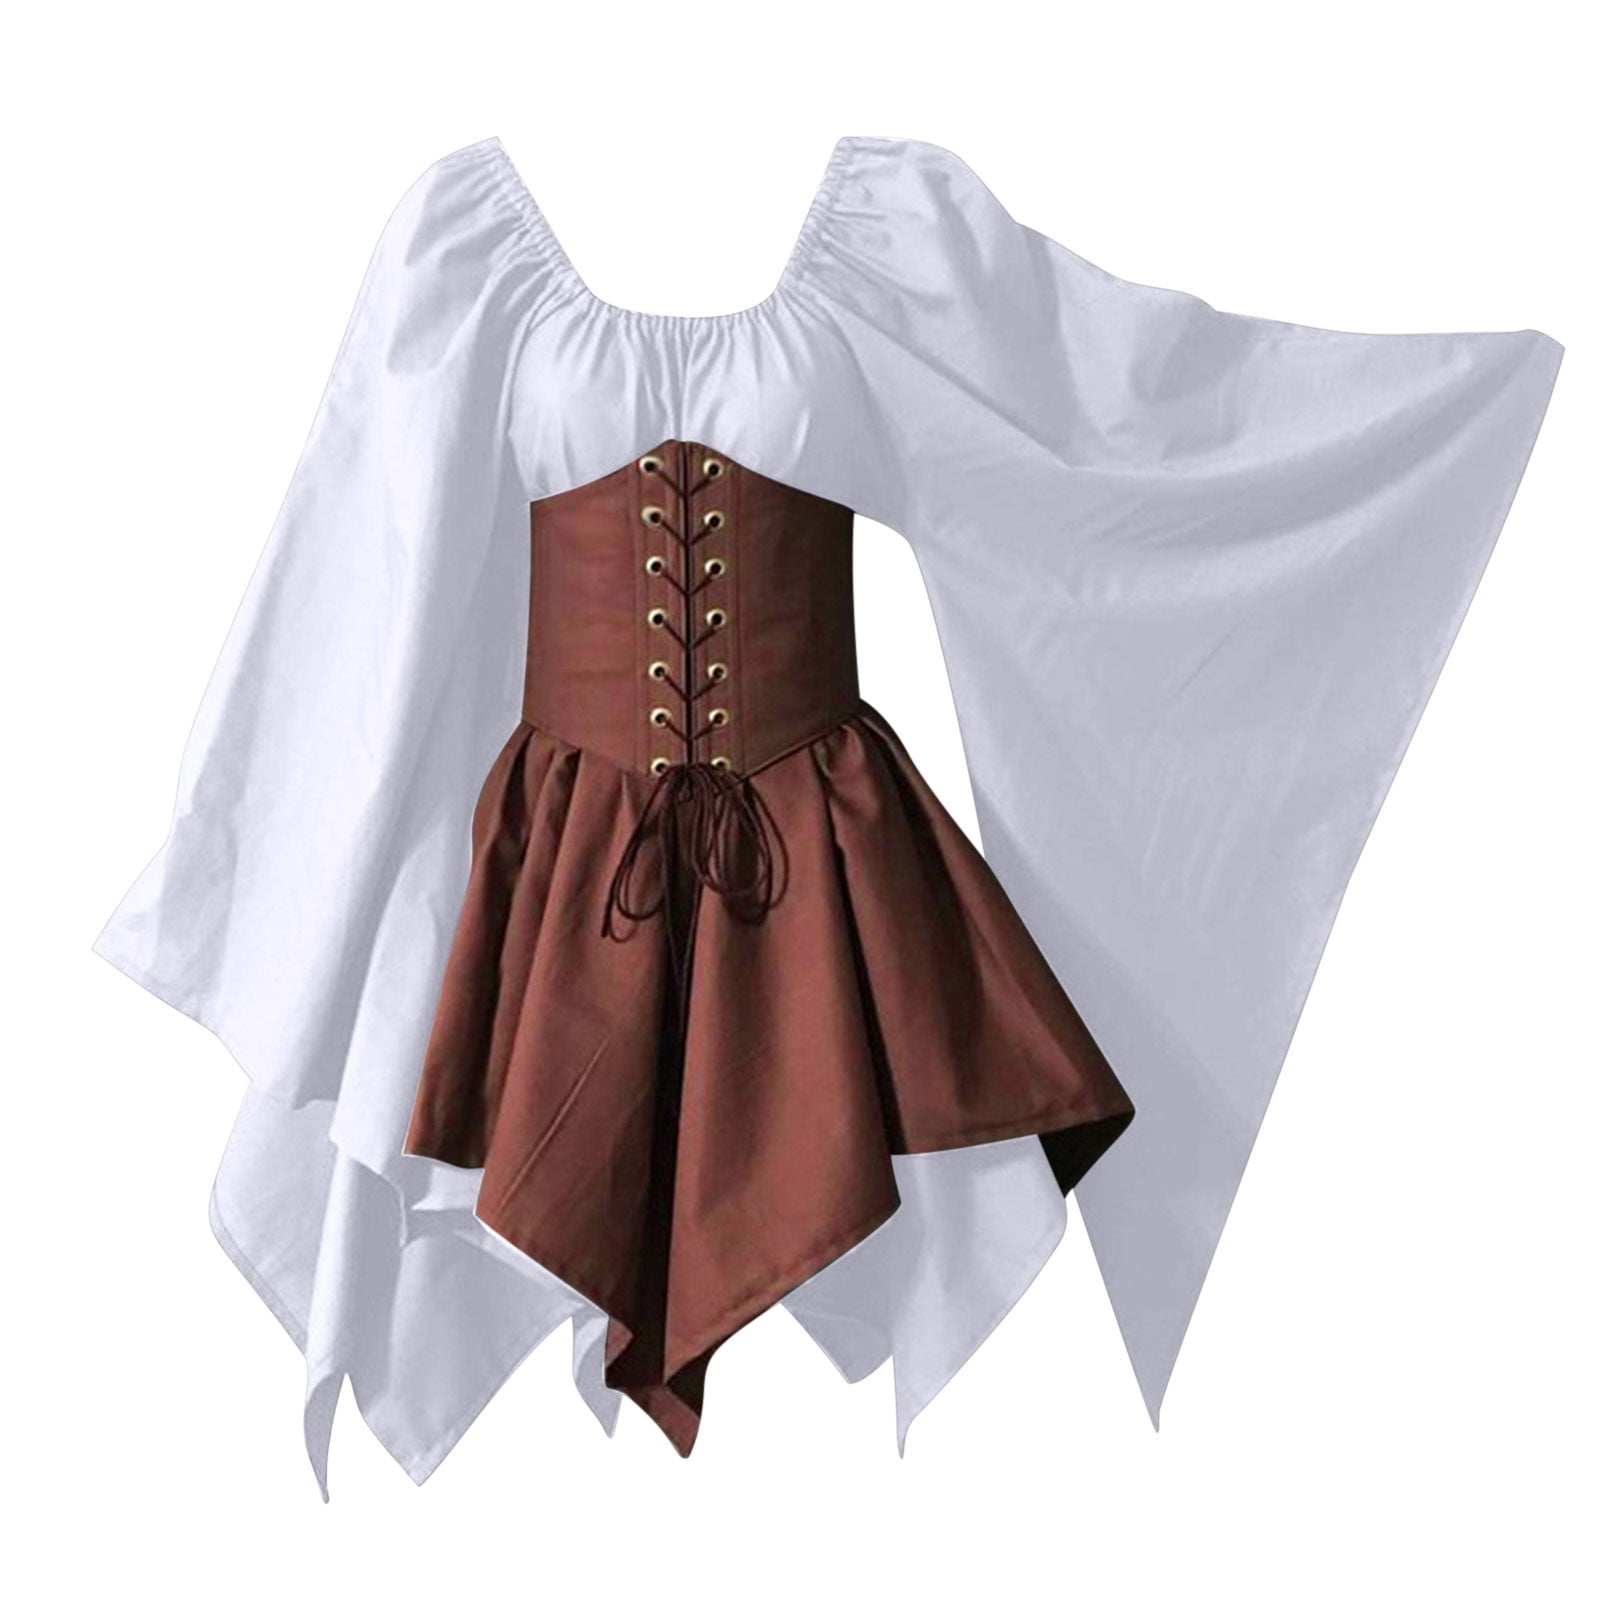 Naughtyhood Women's Medieval Renaissance Costume Dress Vintage